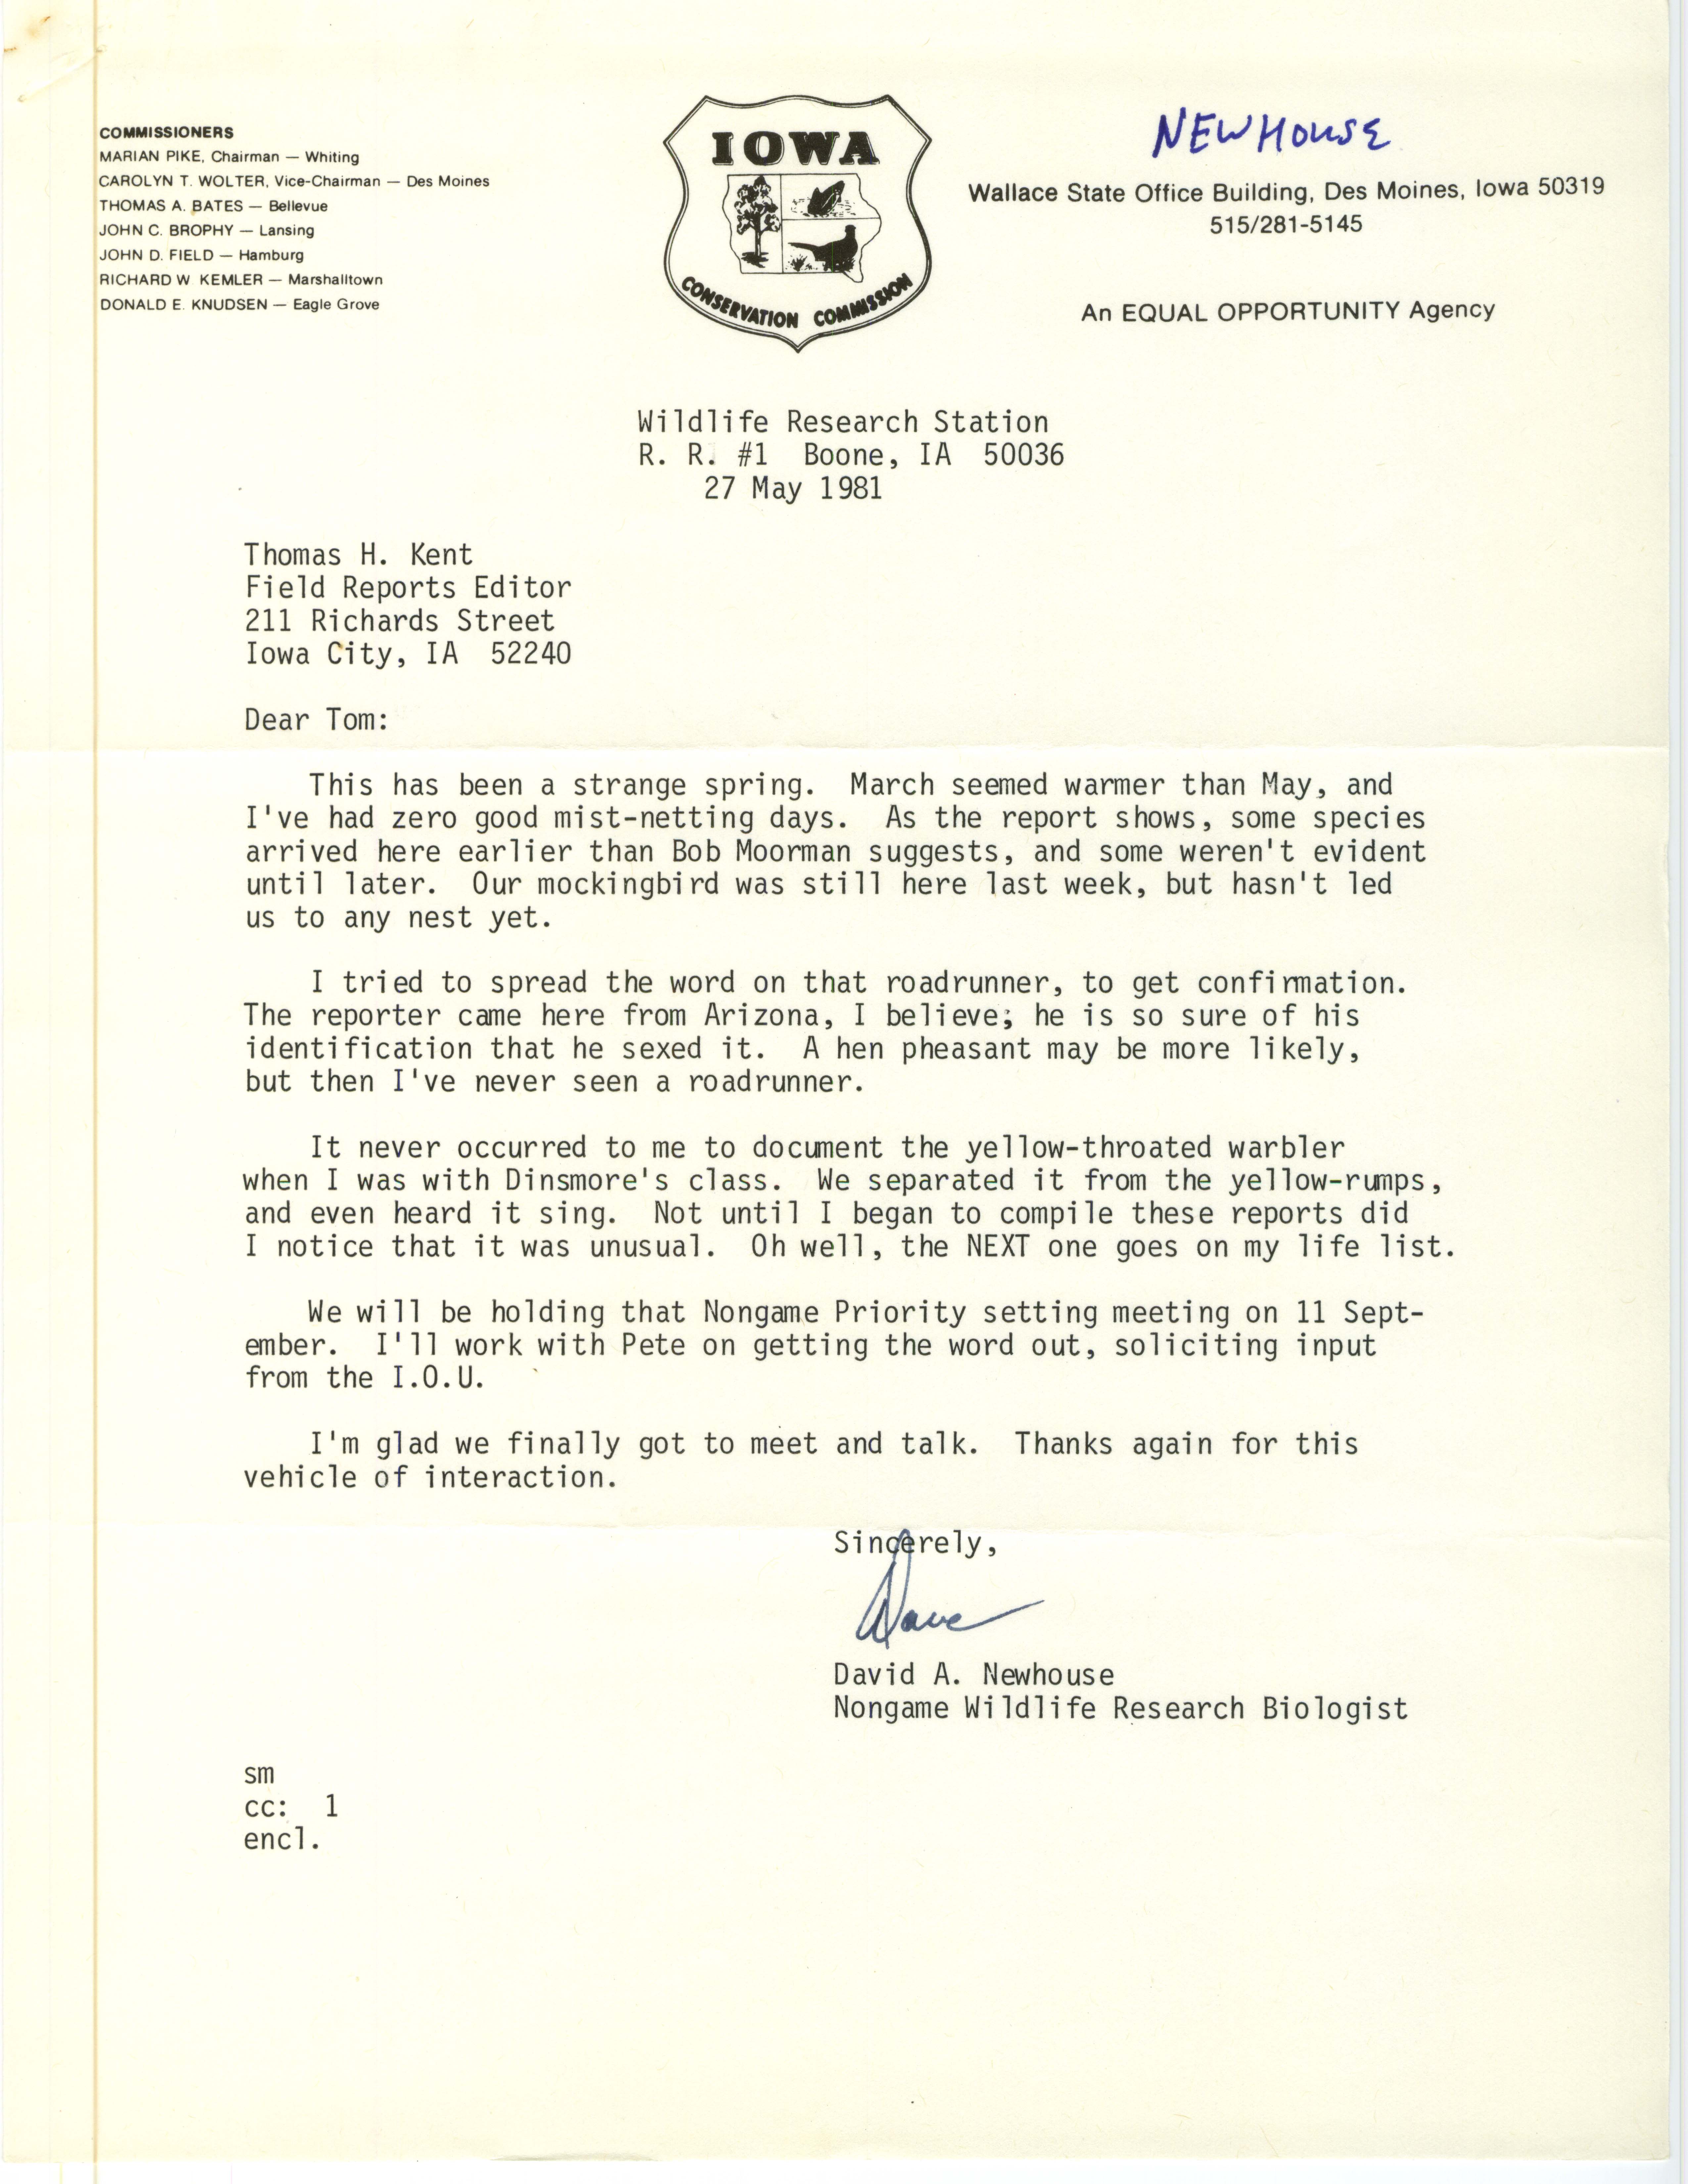 David Newhouse letter to Thomas Kent regarding spring, May 27, 1981